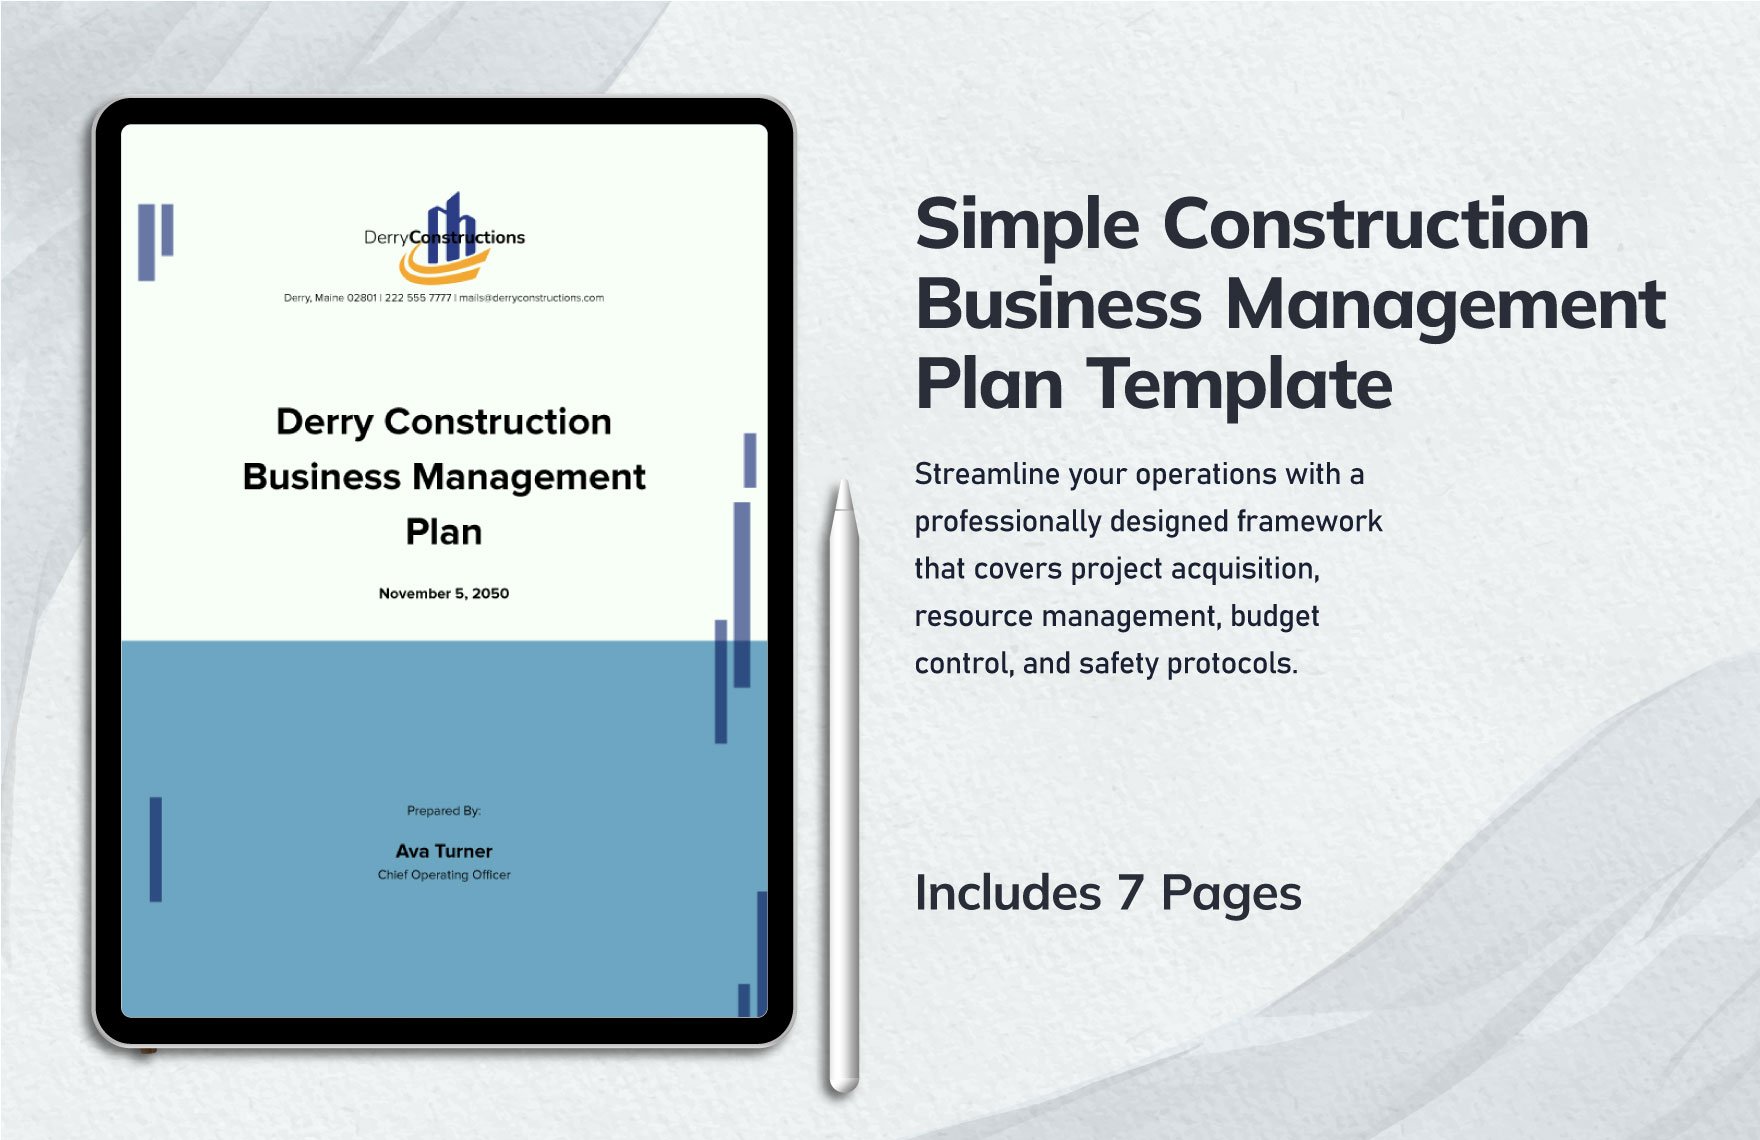 Simple Construction Business Management Plan Template